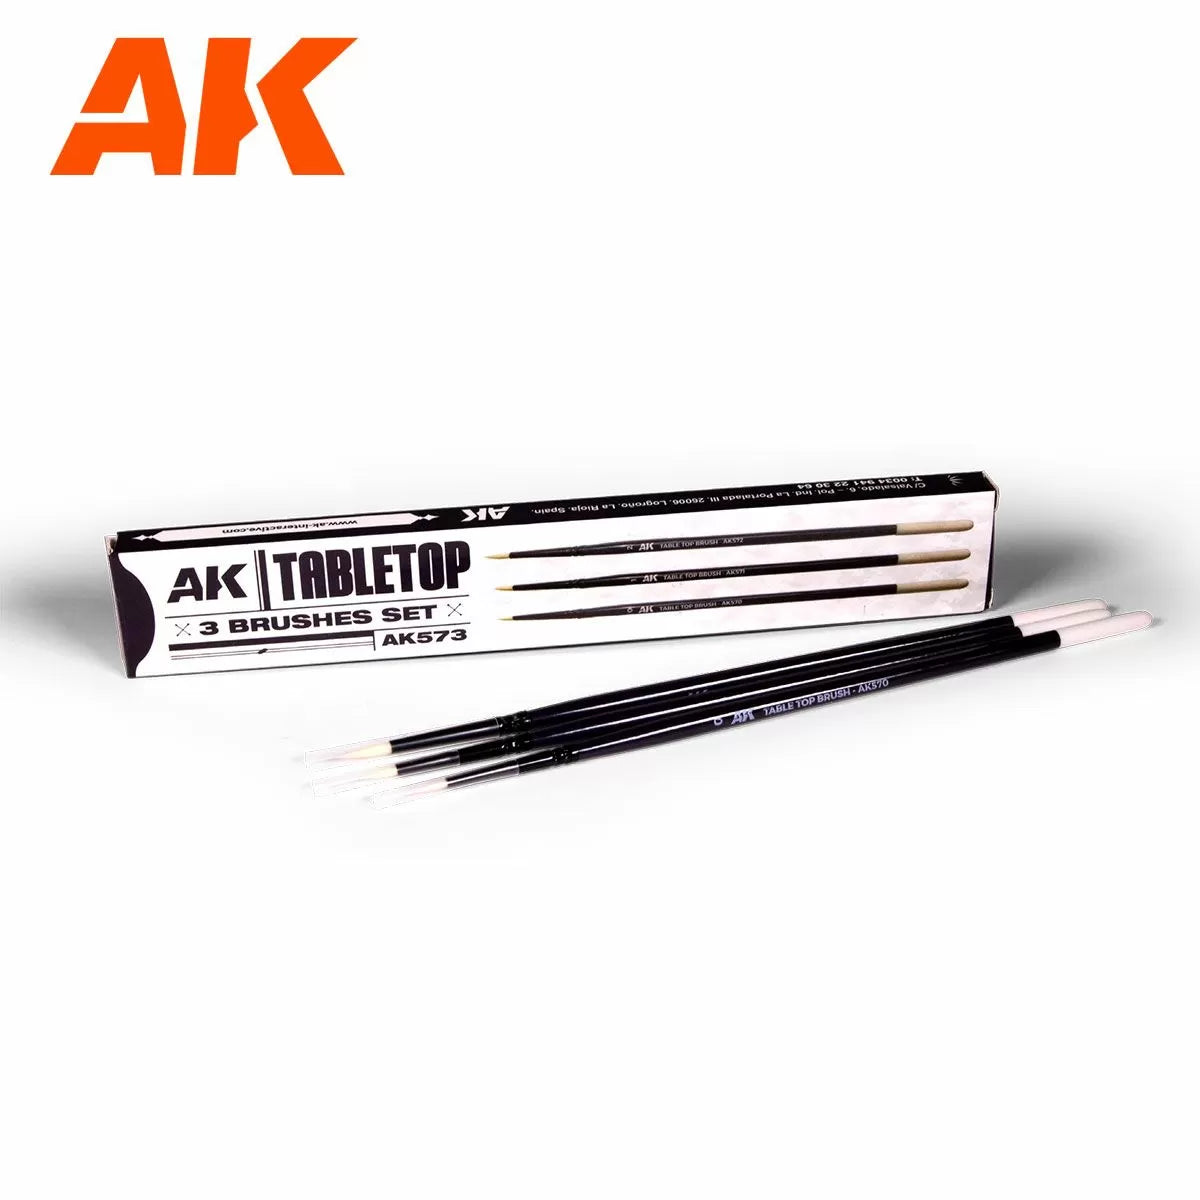 AK Interactive Brushes - Tabletop Brushes Set 0, 1, 2